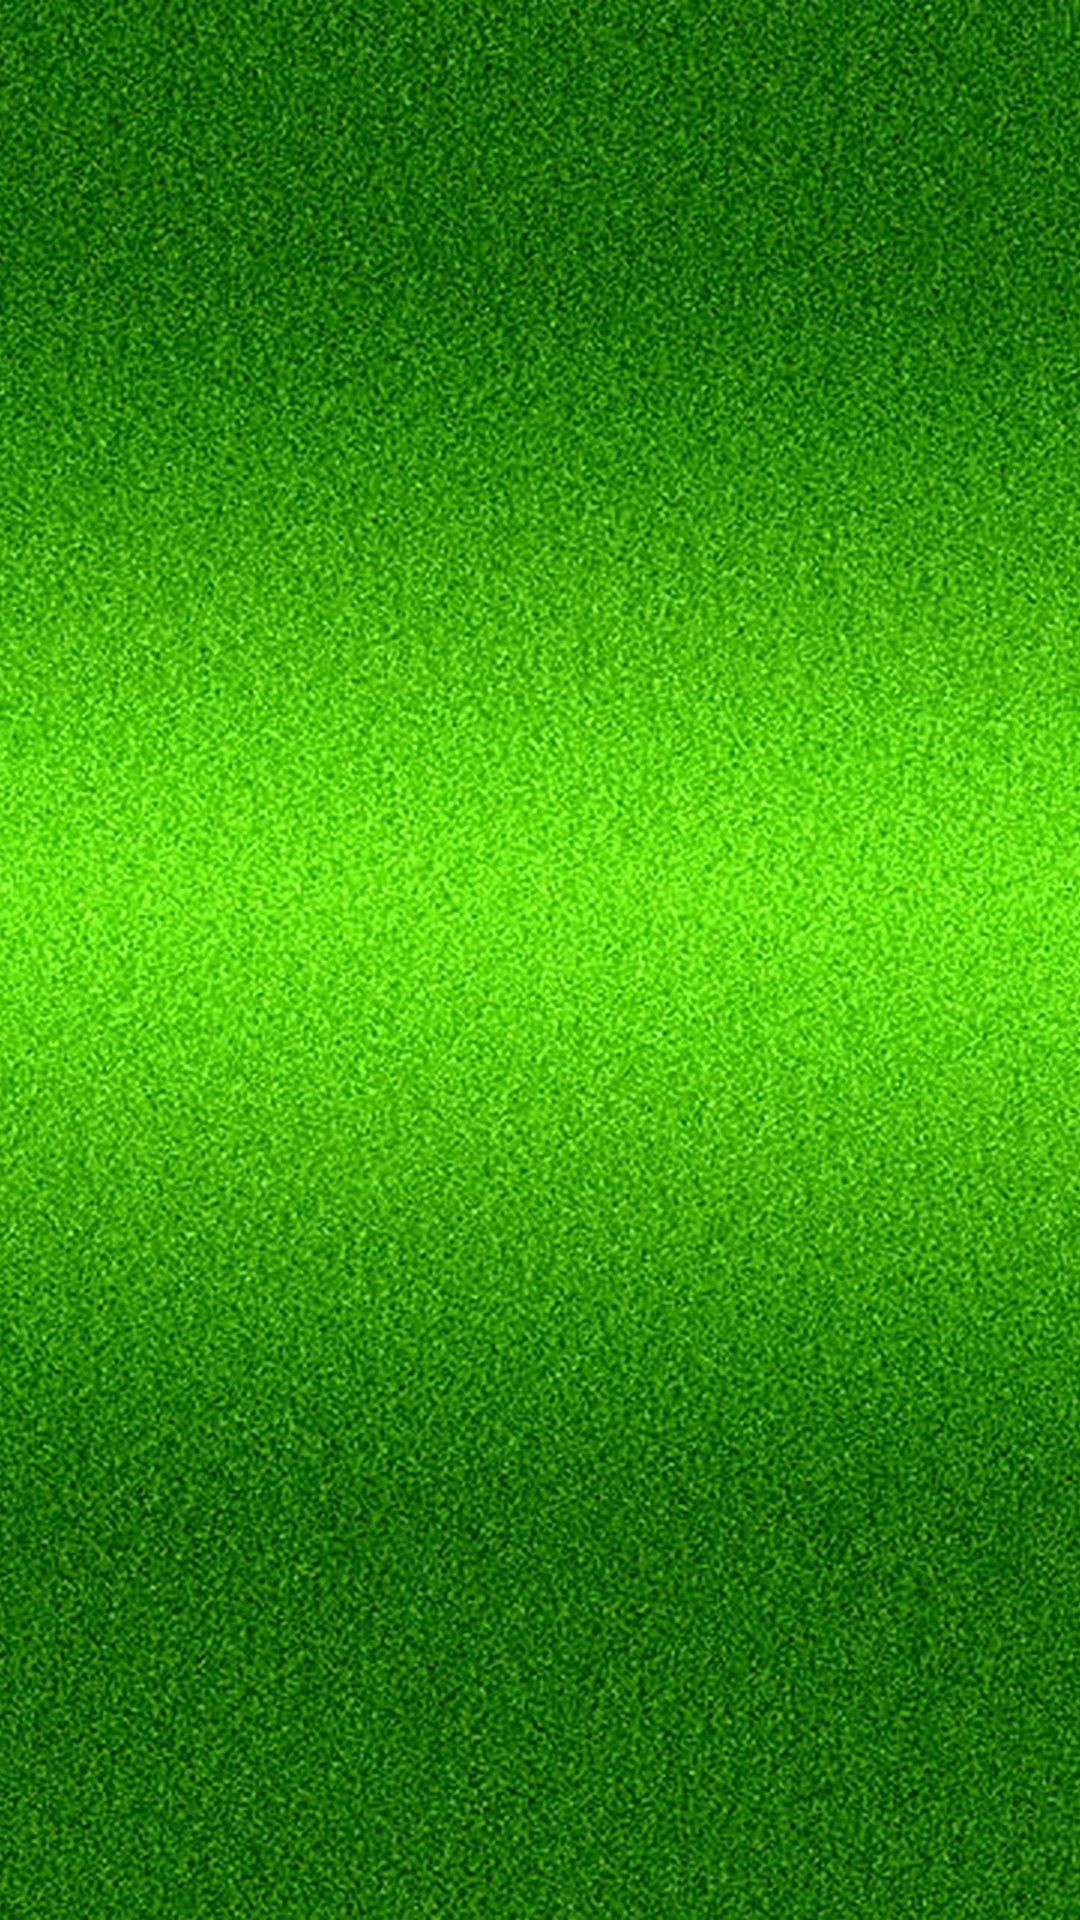 Green Color Mobile Wallpaper HD posted .cutewallpaper.org